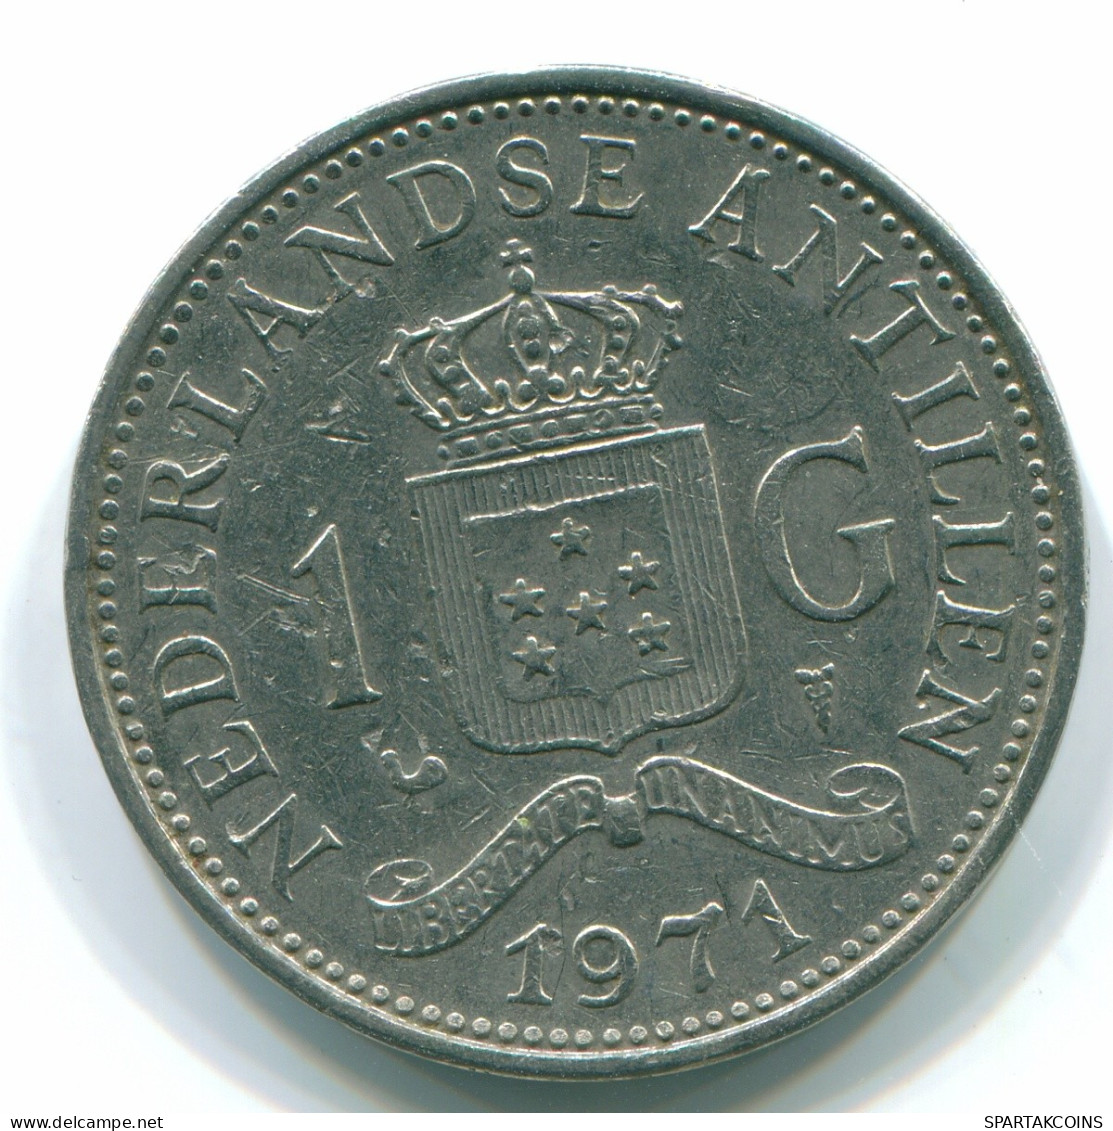 1 GULDEN 1971 NETHERLANDS ANTILLES Nickel Colonial Coin #S11988.U.A - Netherlands Antilles